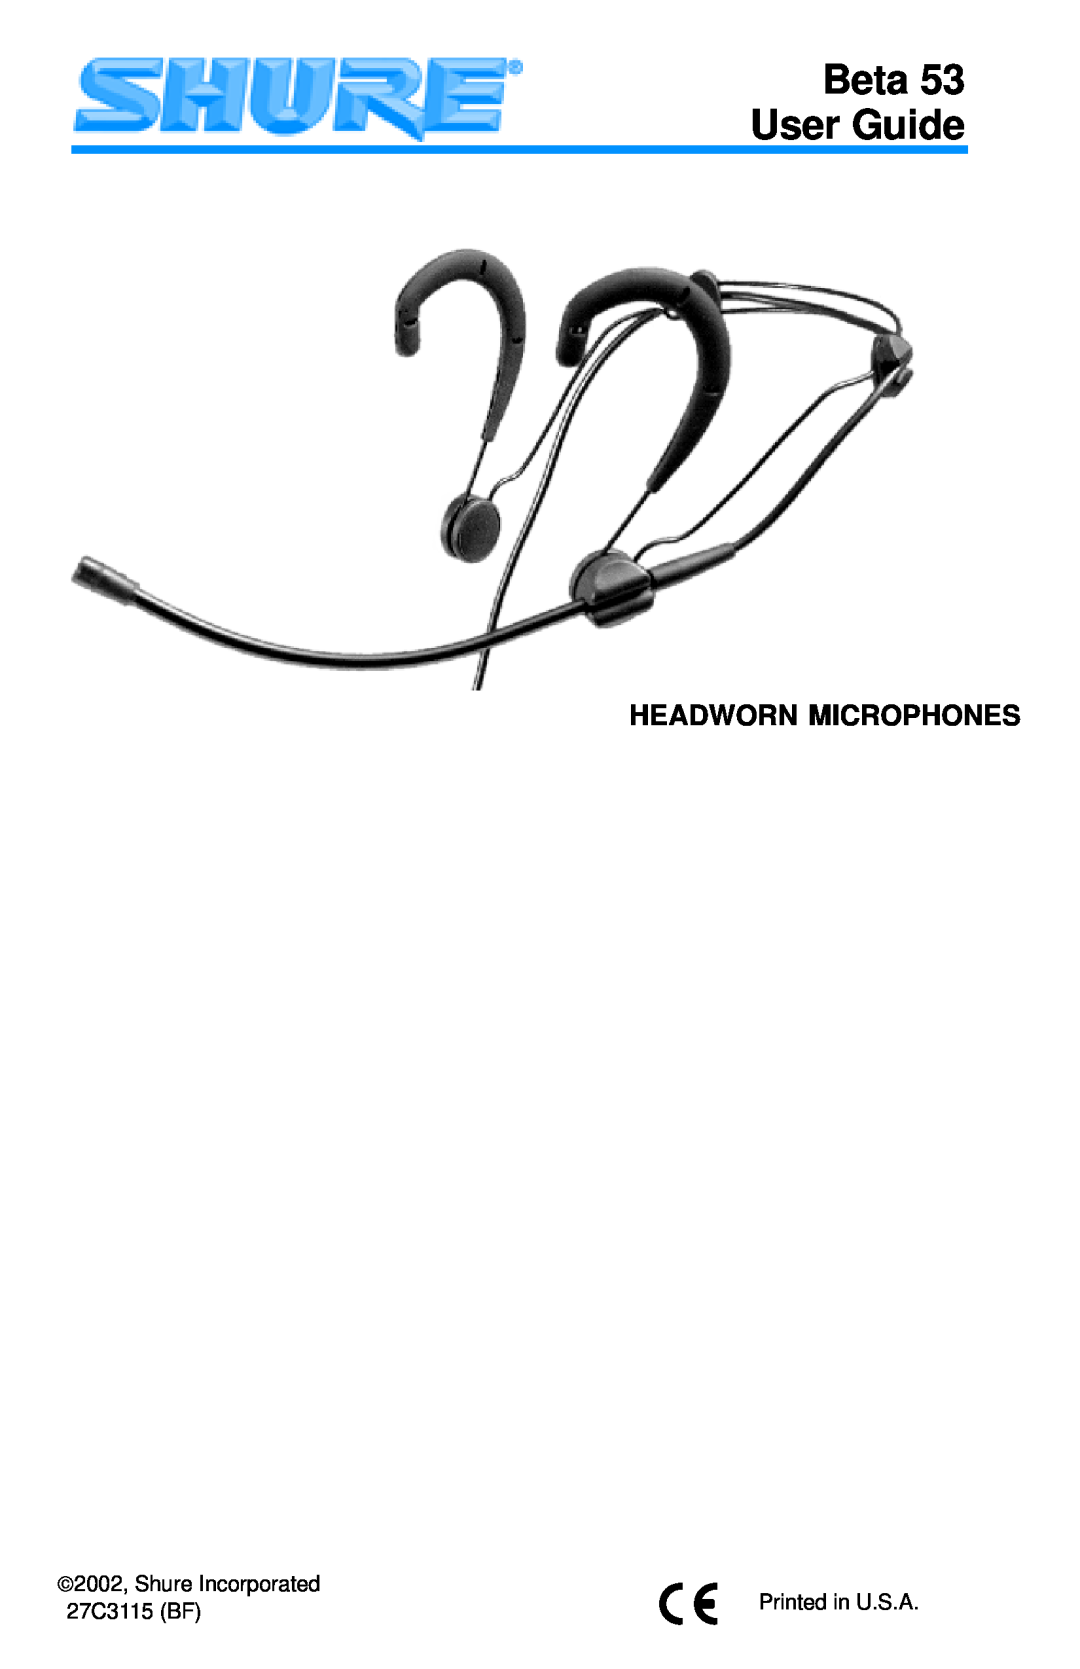 Shure manual Beta User Guide, Headworn Microphones, 2002, Shure Incorporated, 27C3115 BF 